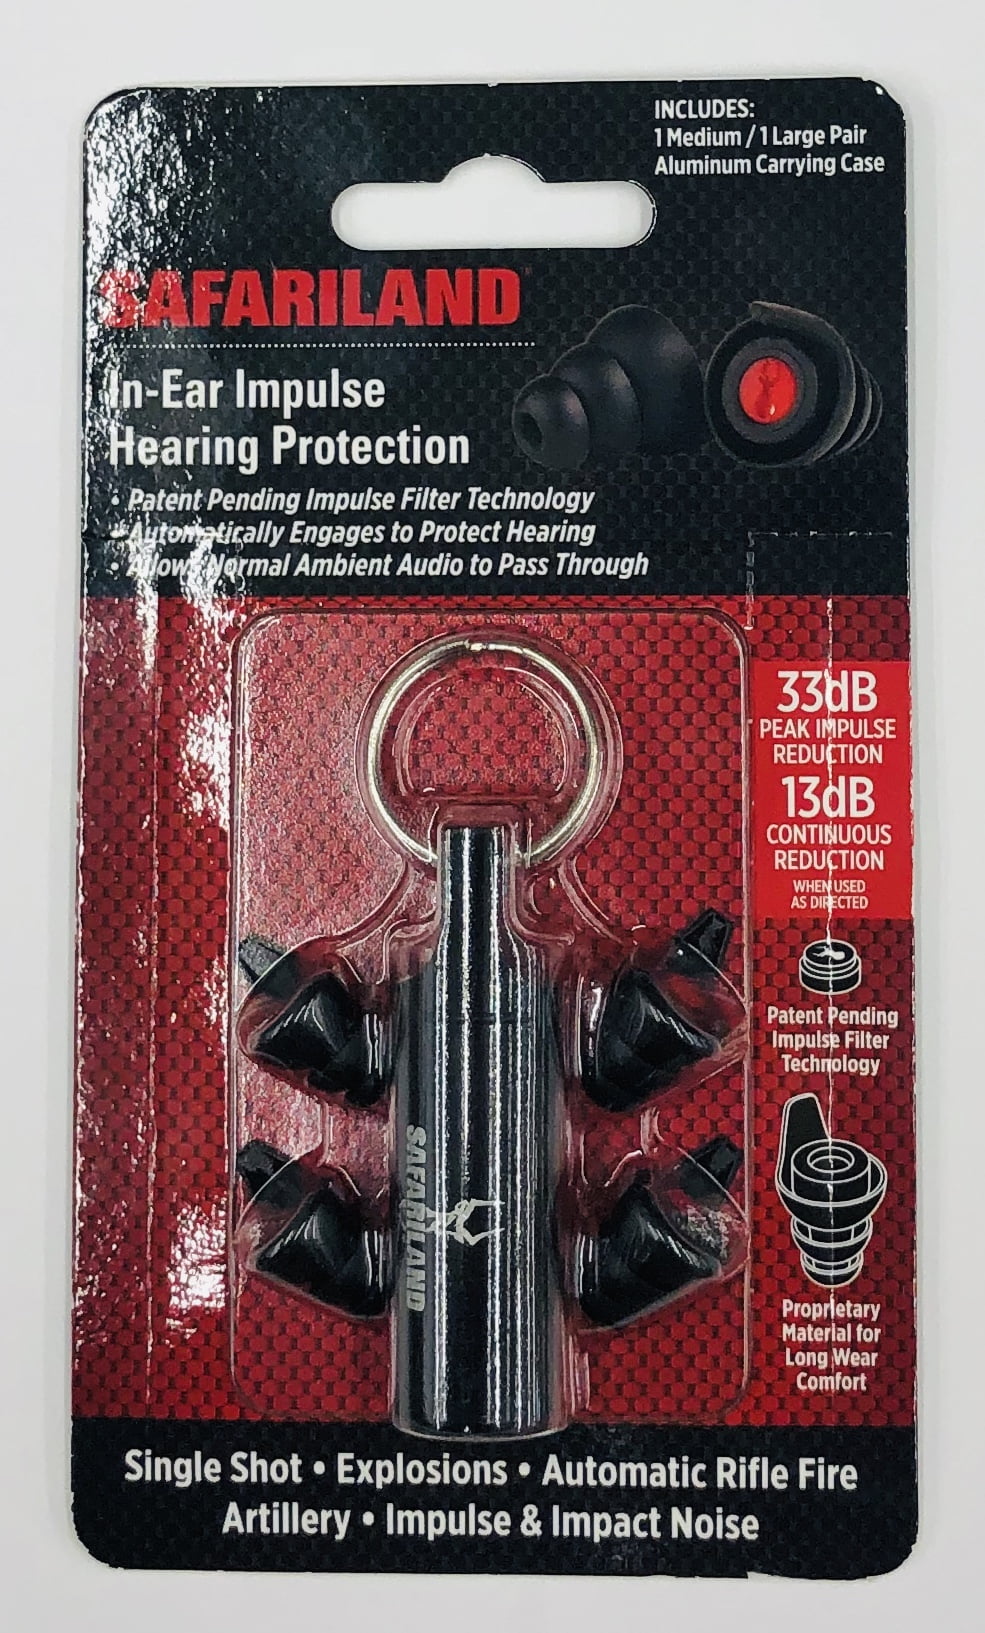 Safariland In-ear Impulse Hearing Protection Provides 33db Peak Impulse Reduction.